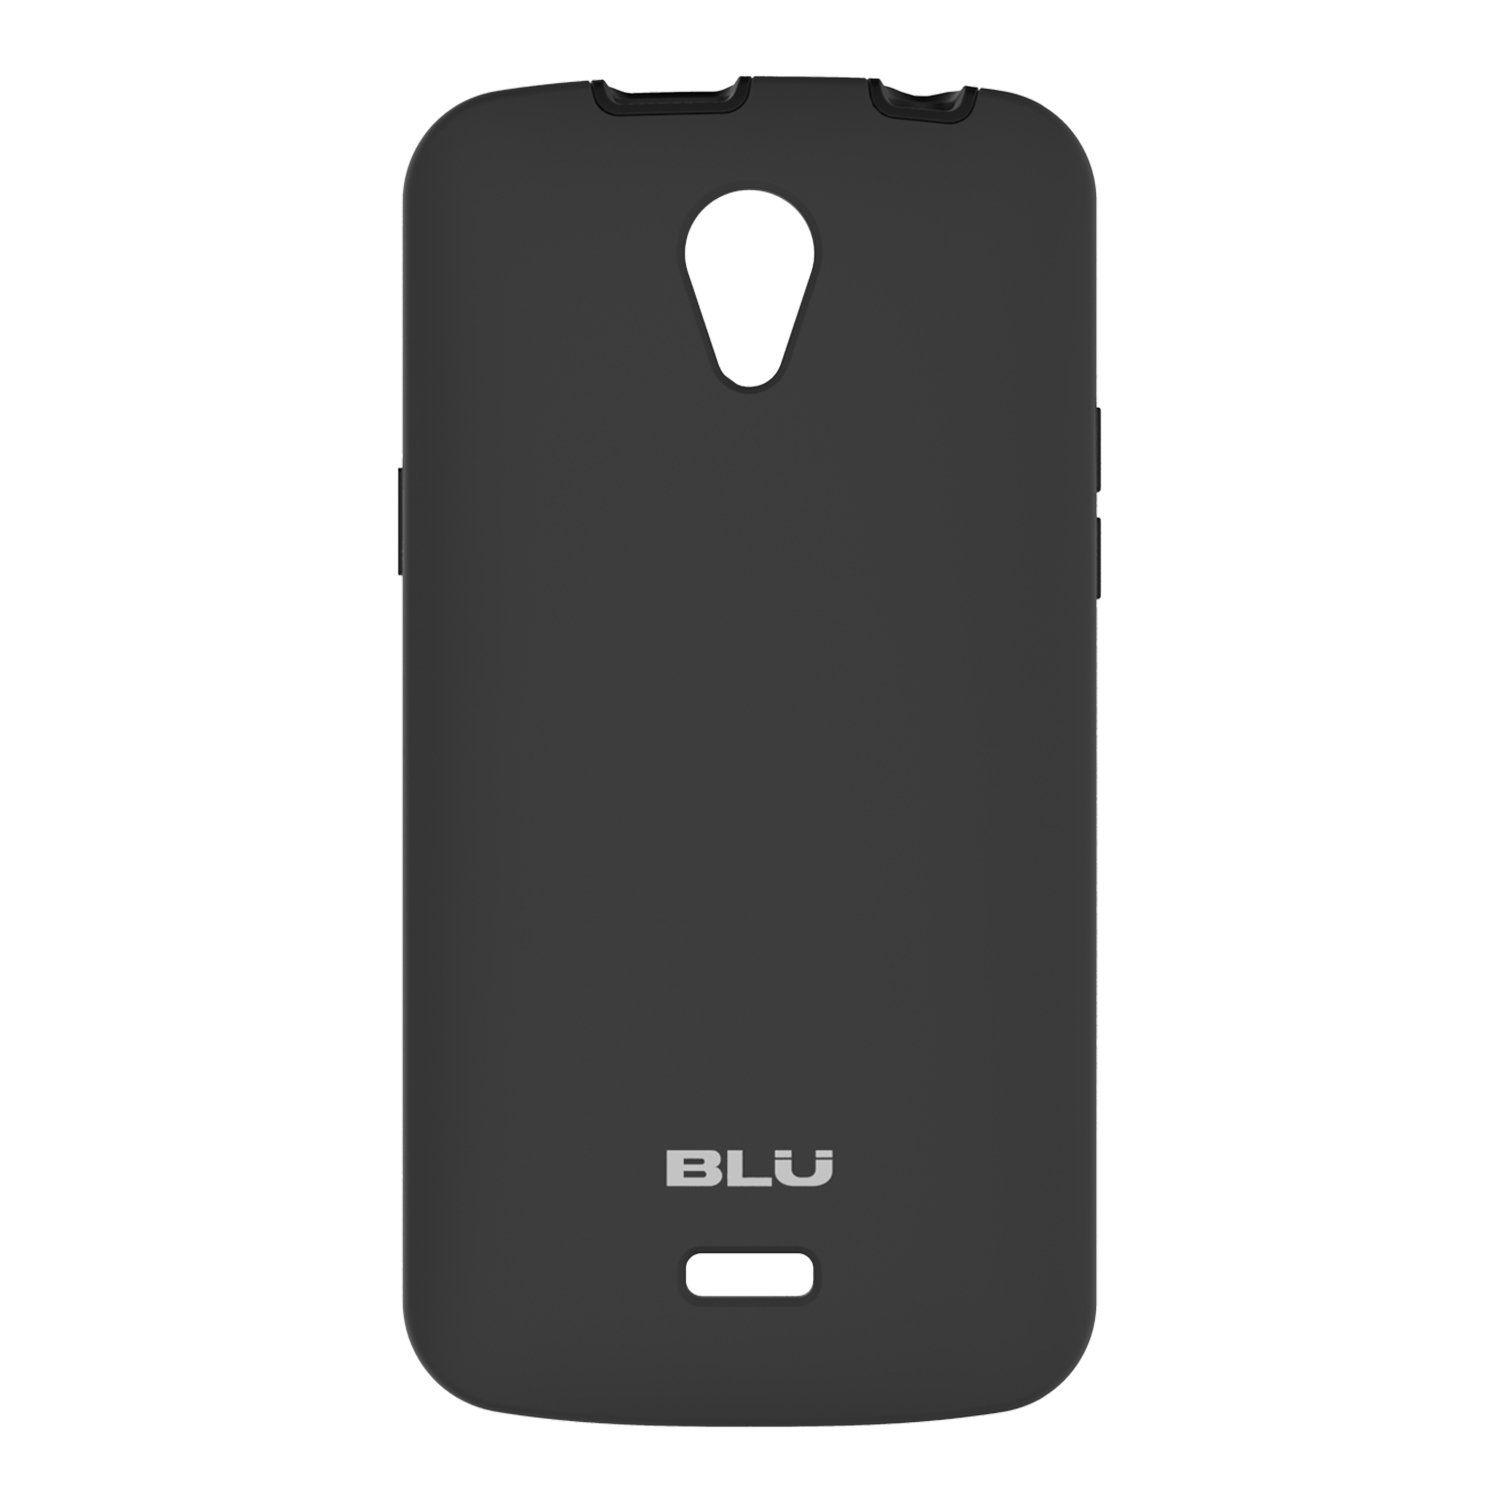 Blu Phone Logo - Amazon.com: BLU Studio X ArmorFlex Case -Black: Cell Phones ...